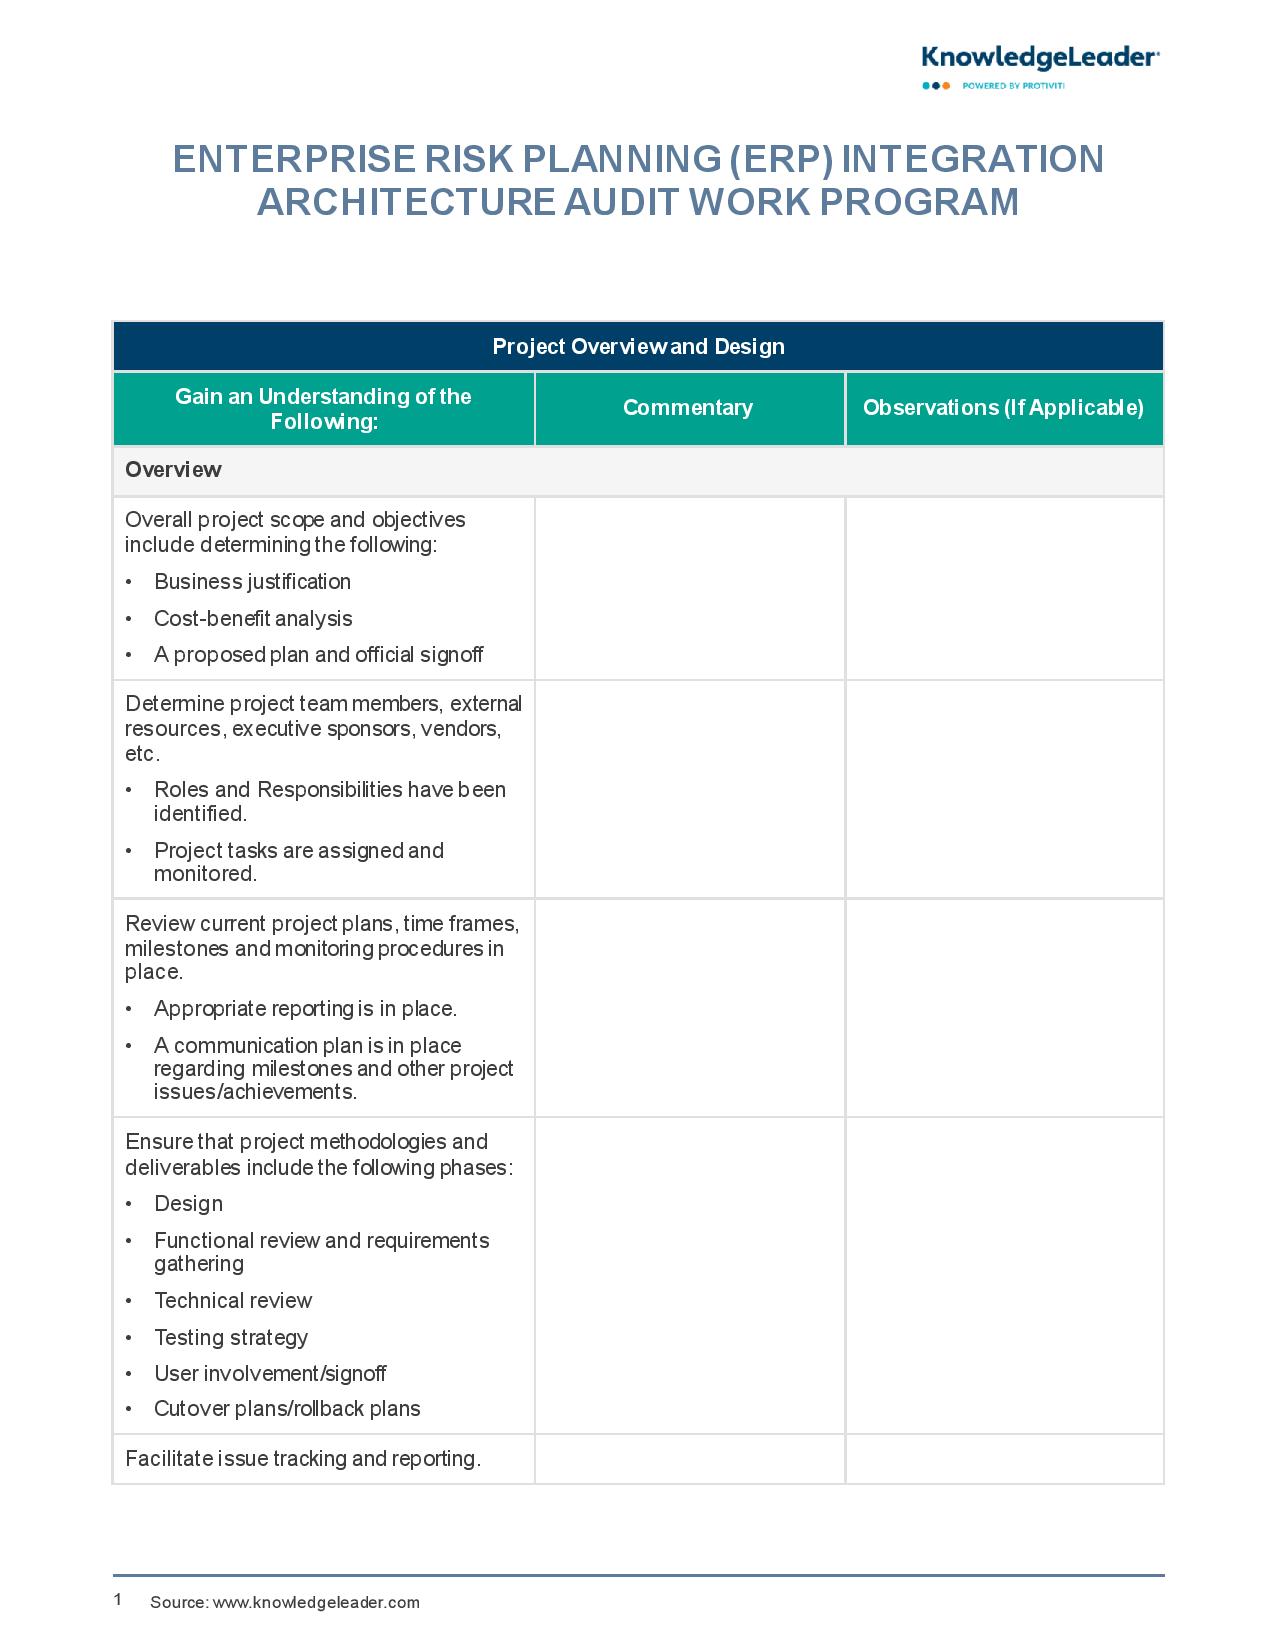 Screenshot of the first page of Enterprise Risk Planning (ERP) Integration Architecture Audit Work Program